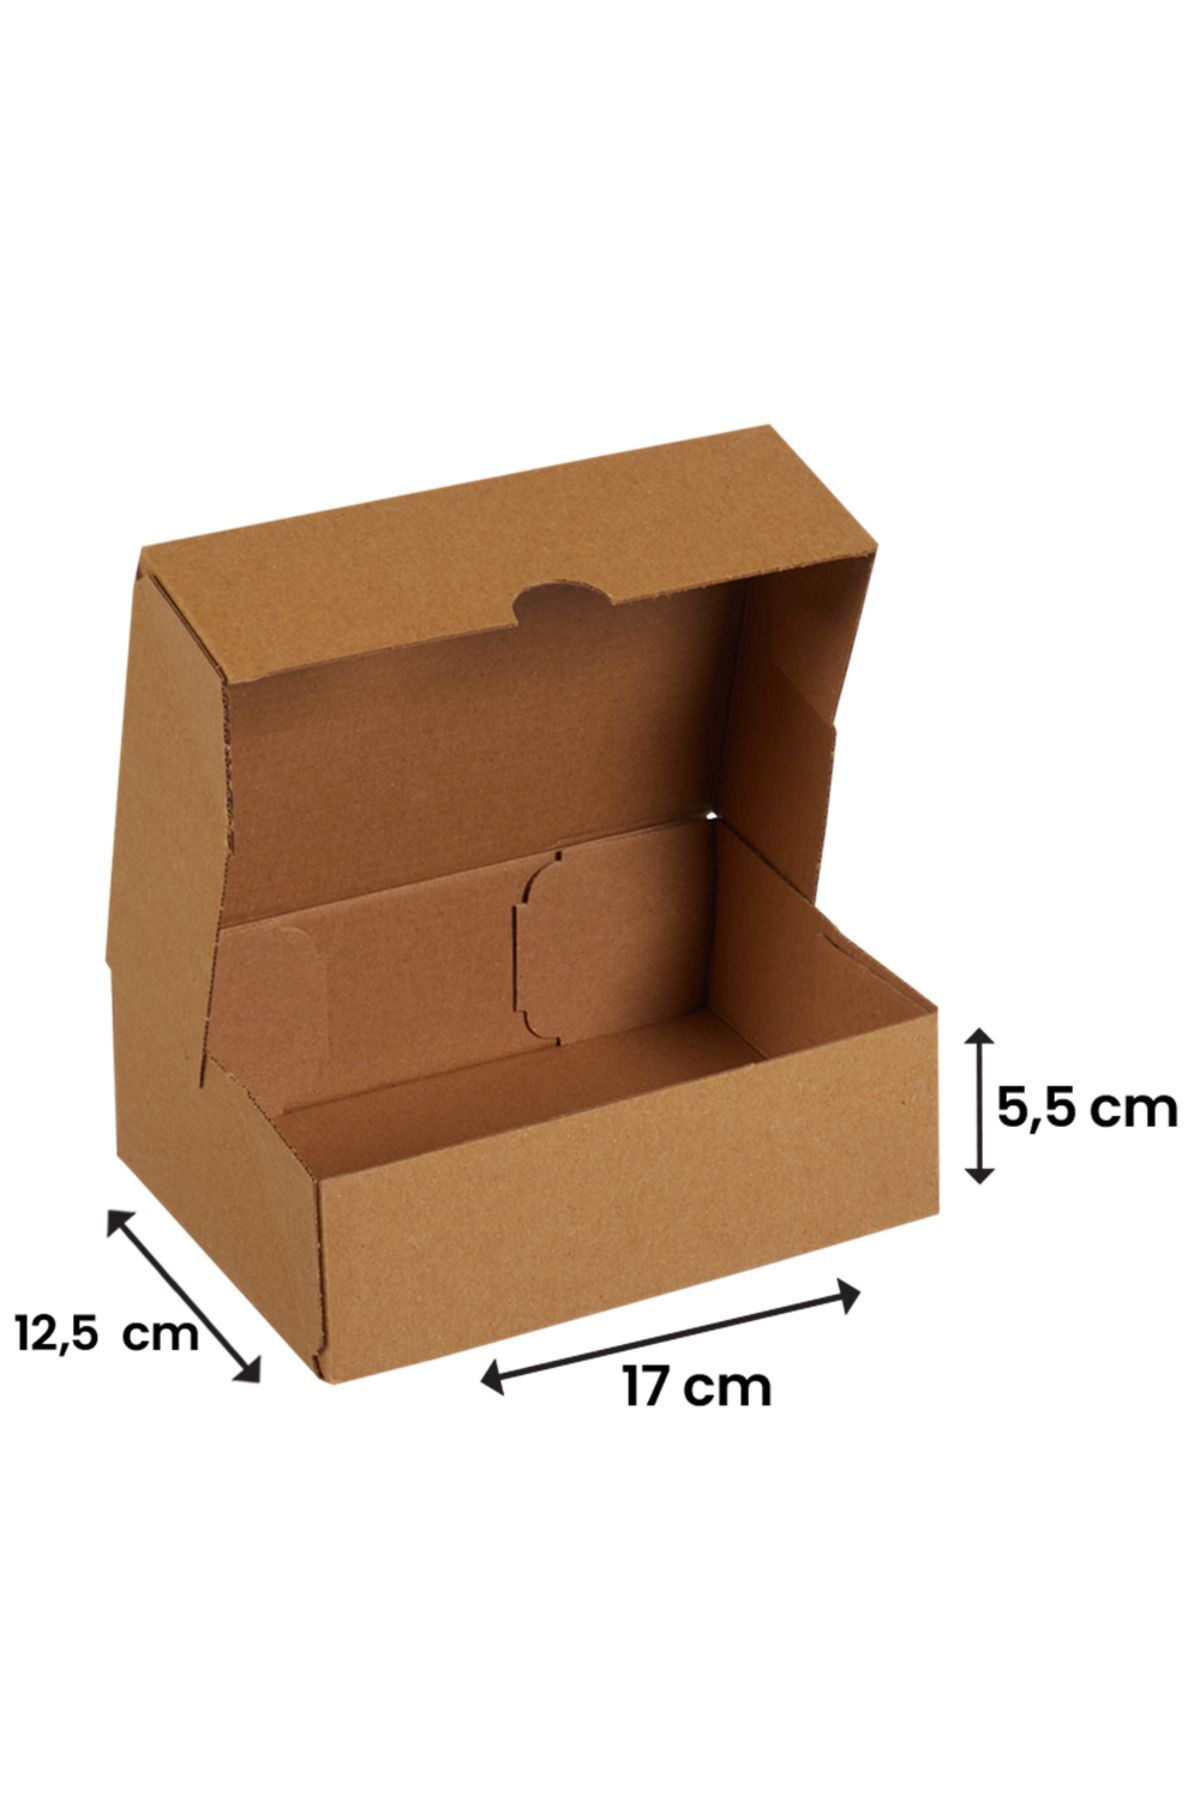 Packanya 17x12,5x5,5-100 Adet Kesimli Karton Kutu - Internet Ve Kargo Kutusu